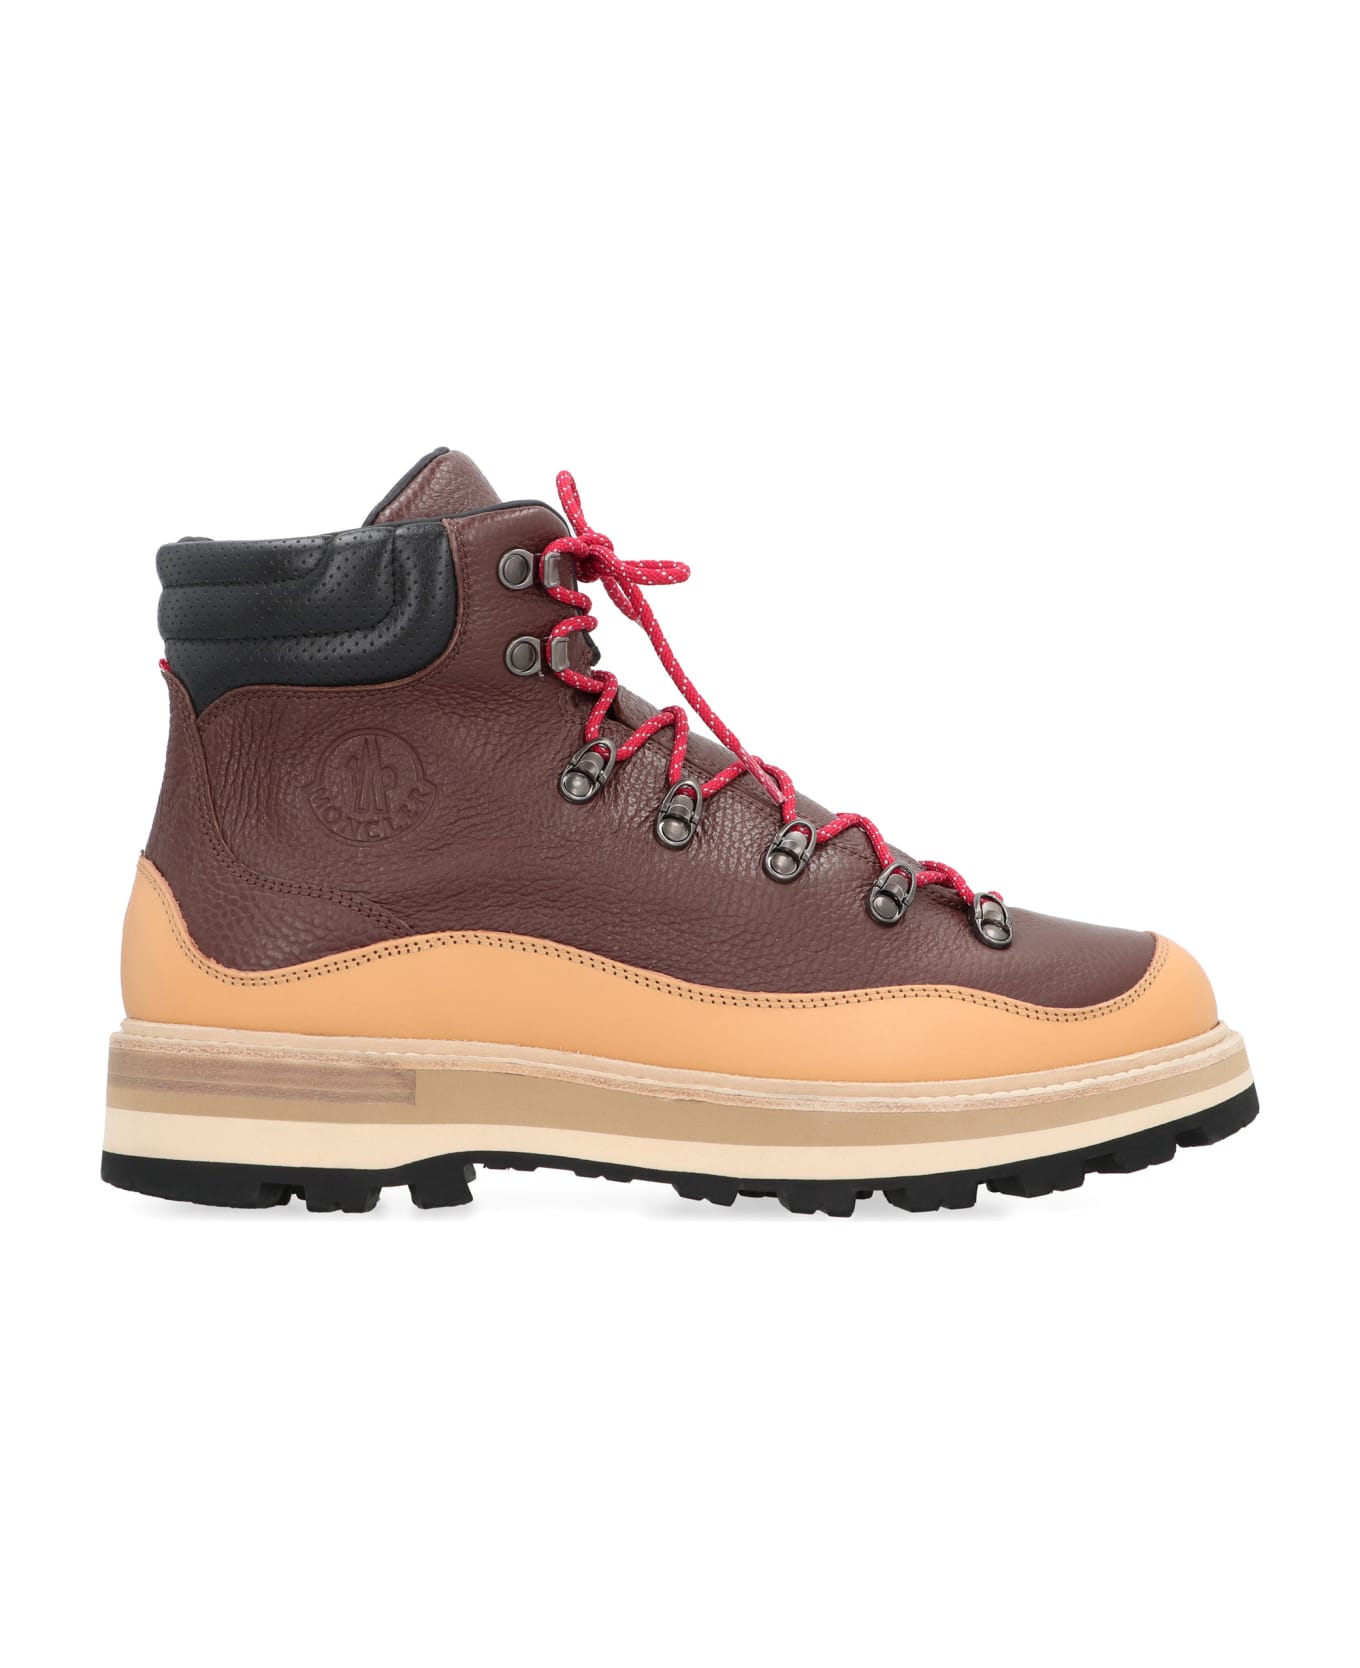 Moncler Peka Hiking Boots - brown